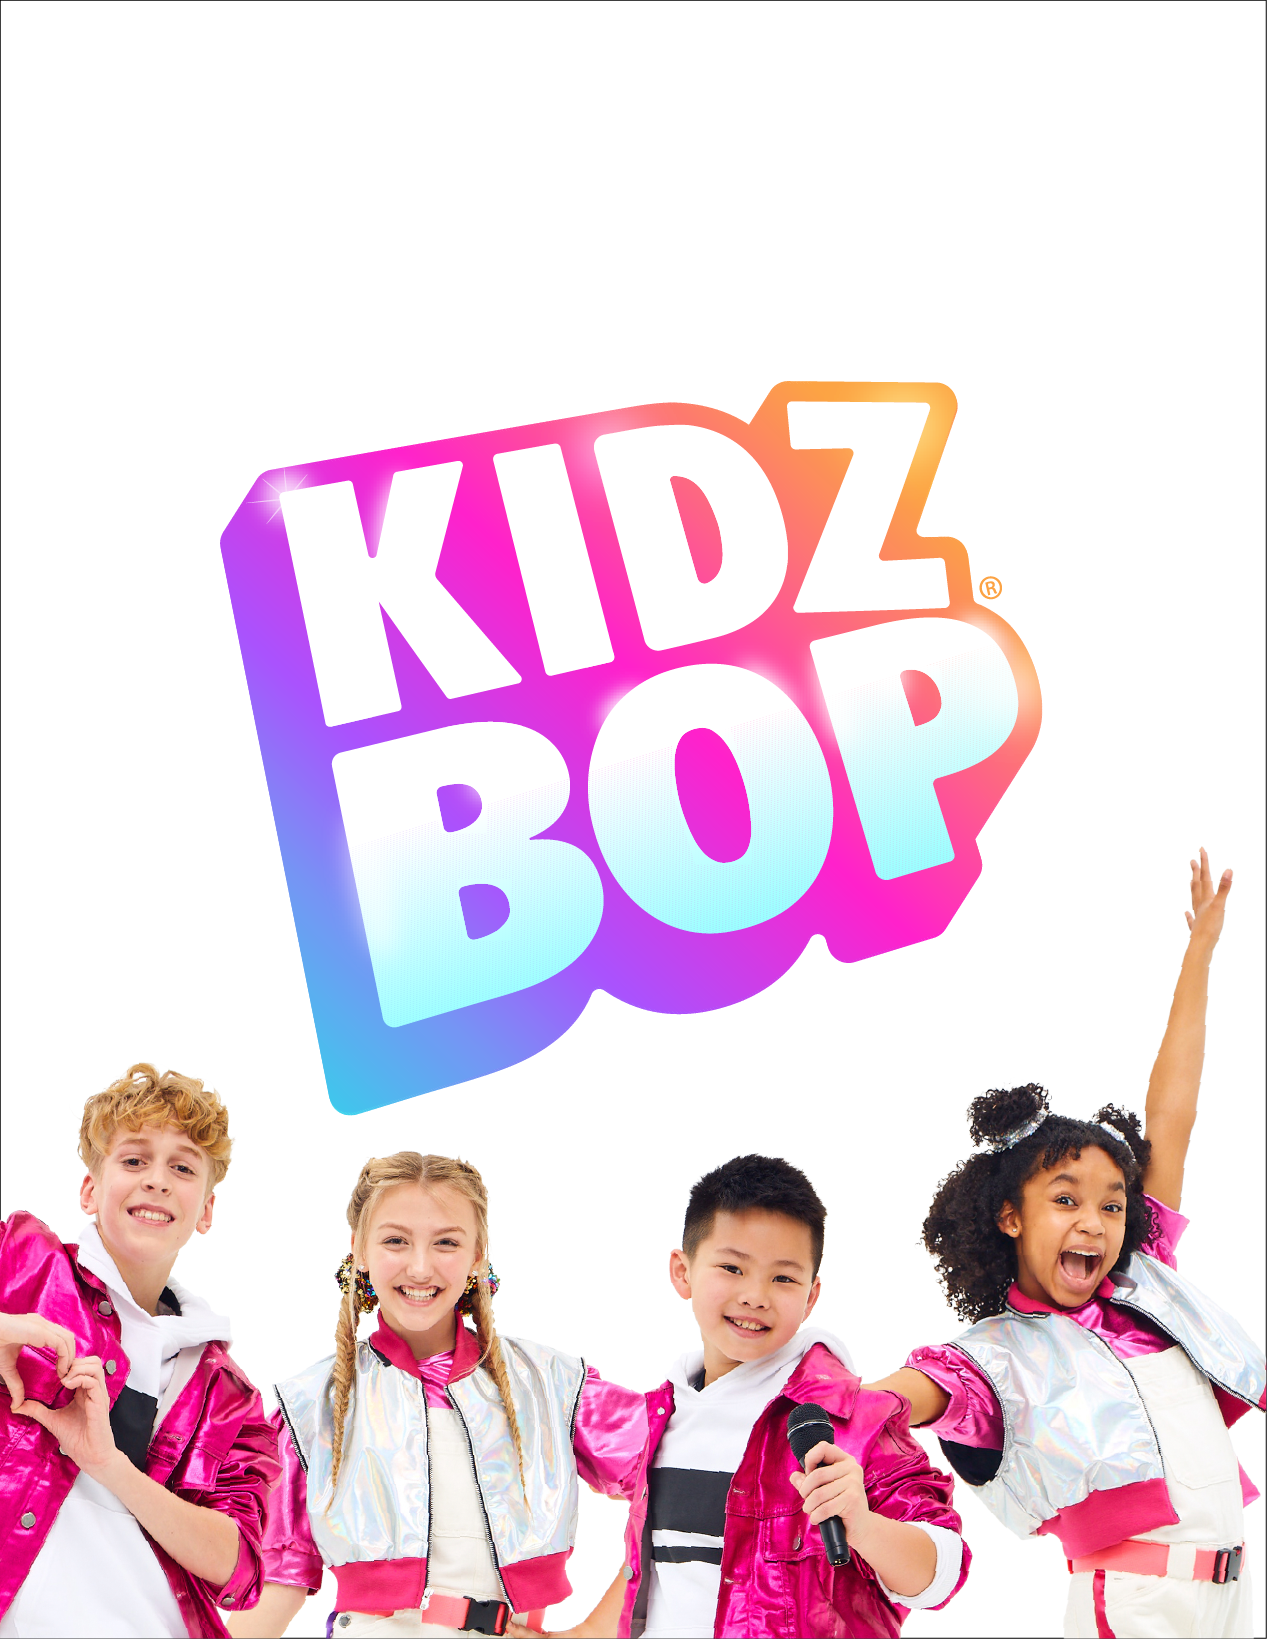 the-kidz-bop-kids